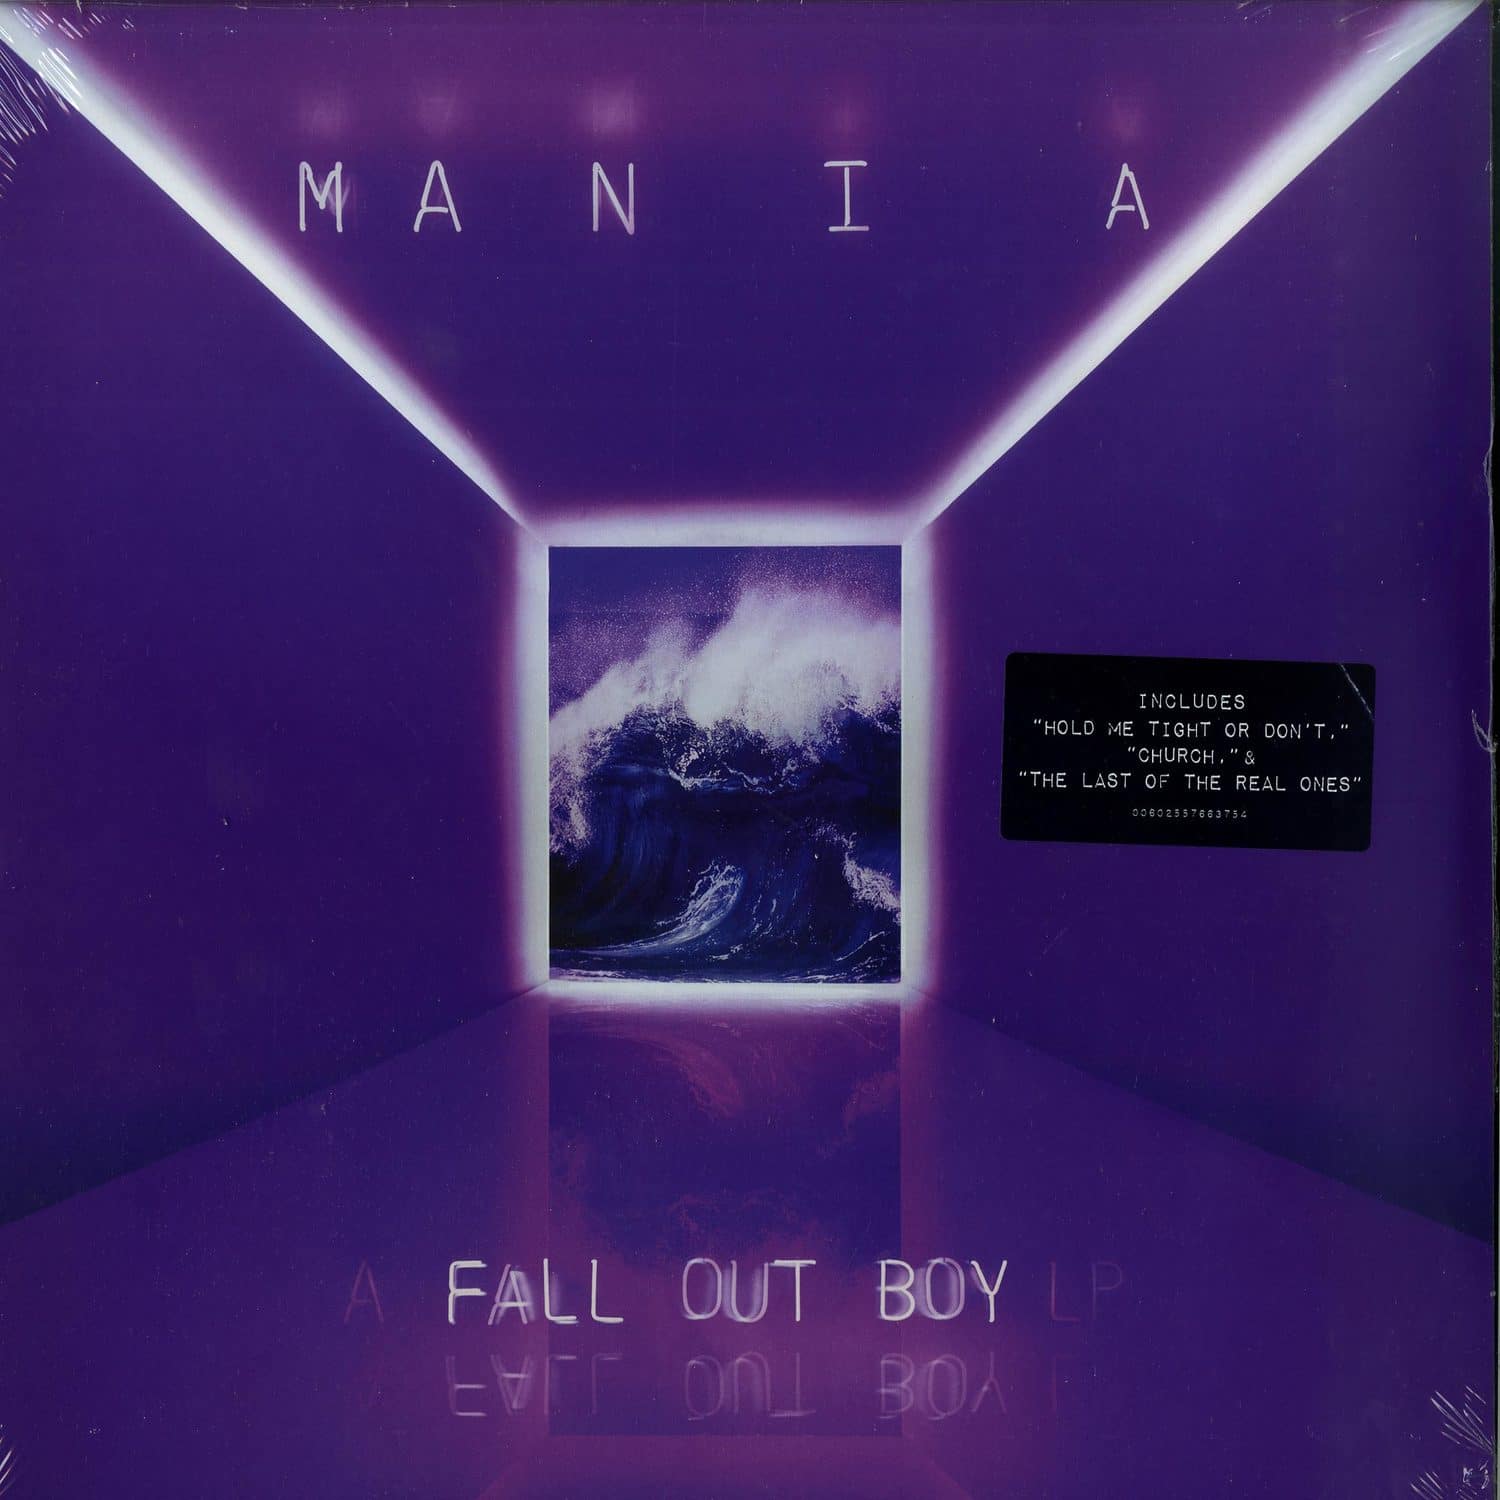 Fall Out Boy - MANIA 